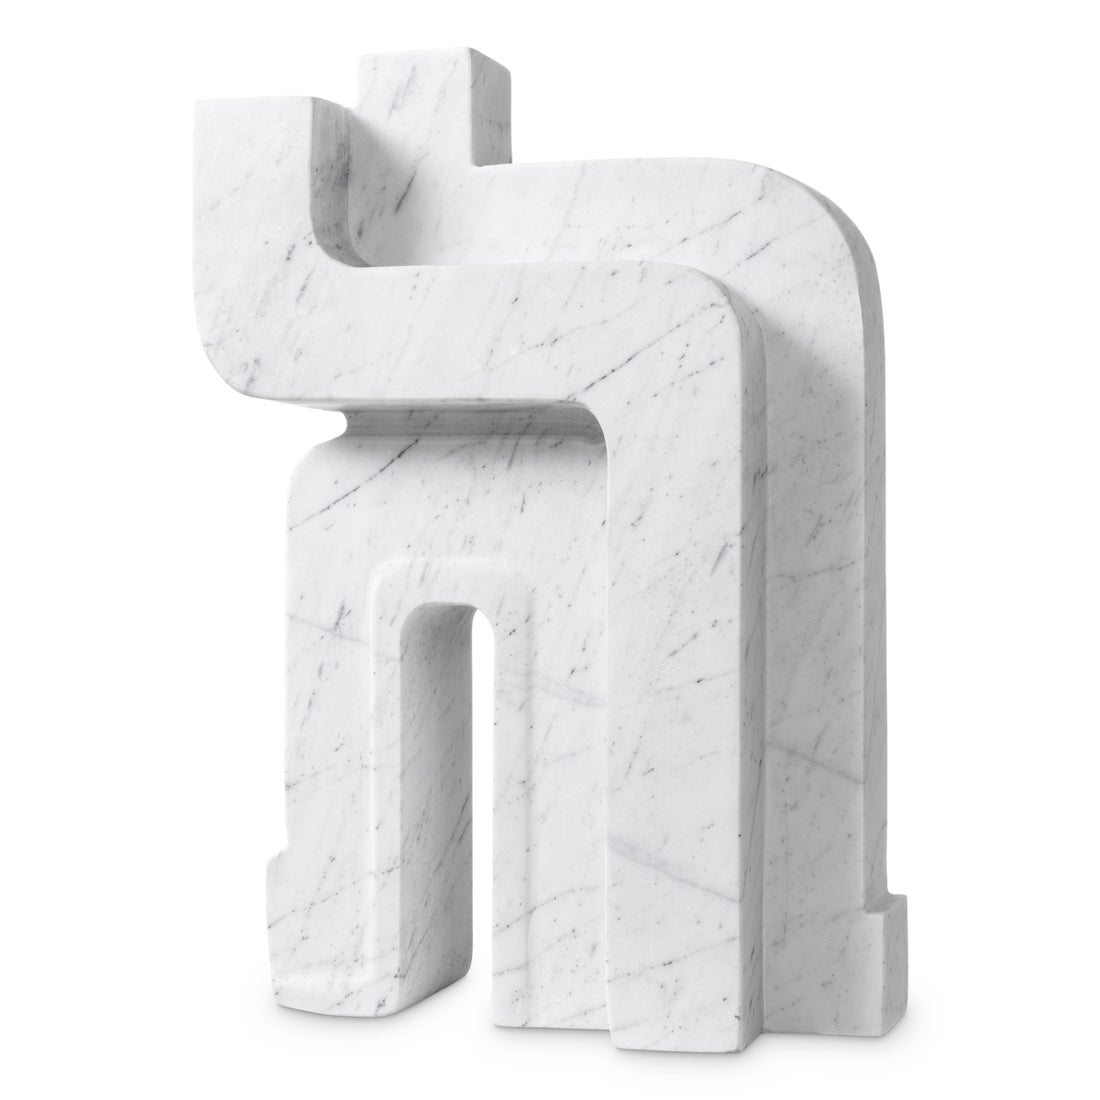 Statue Alaistair white marble